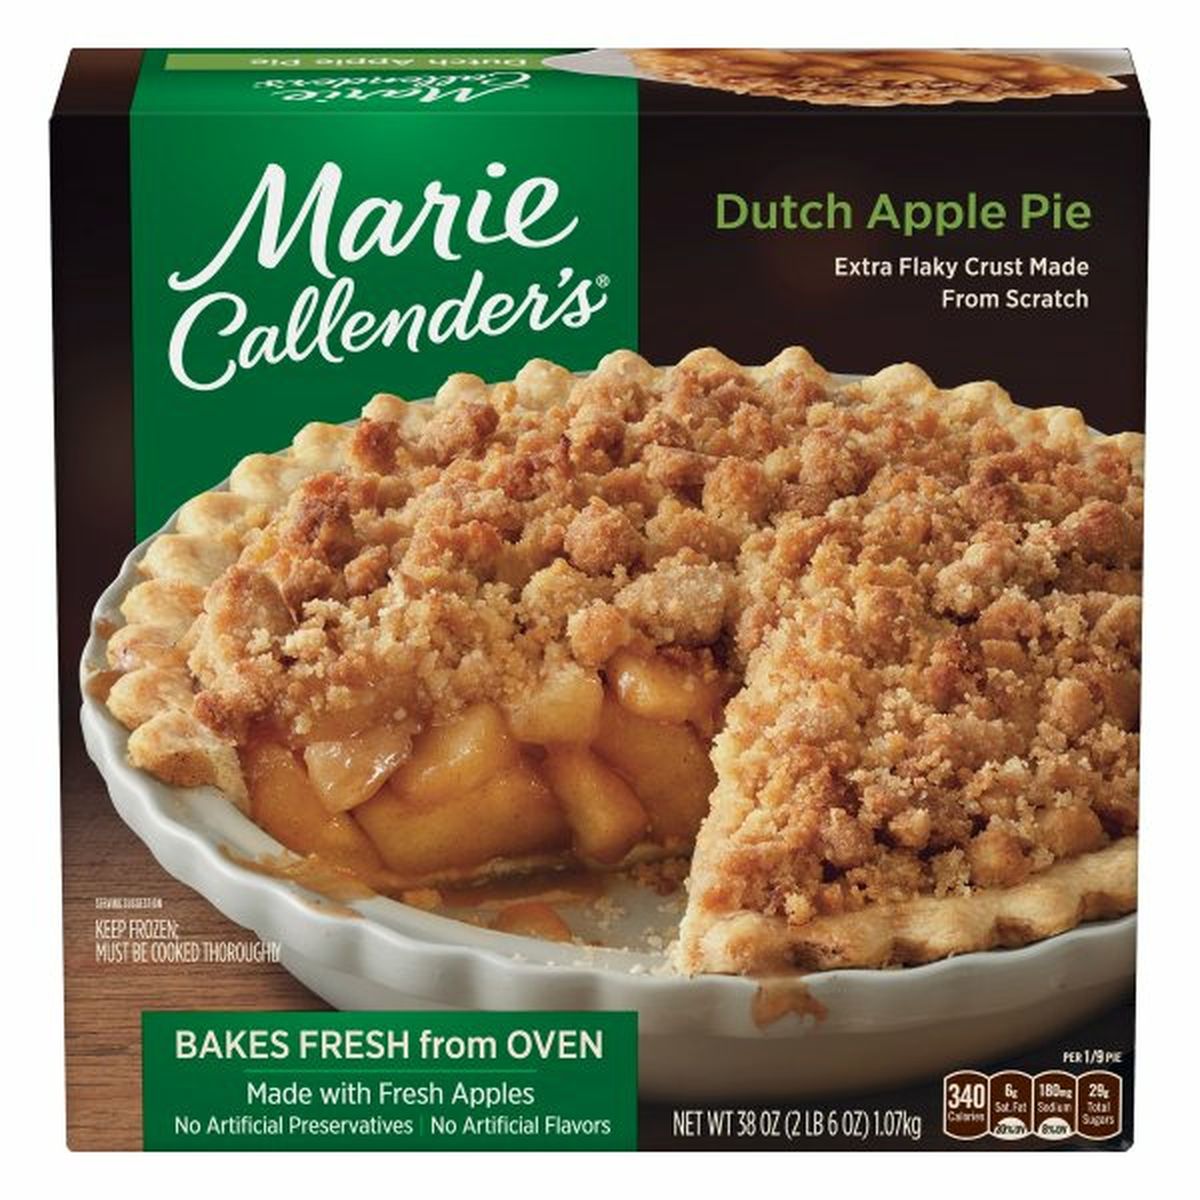 Calories in Marie Callender's Dutch Apple Pie